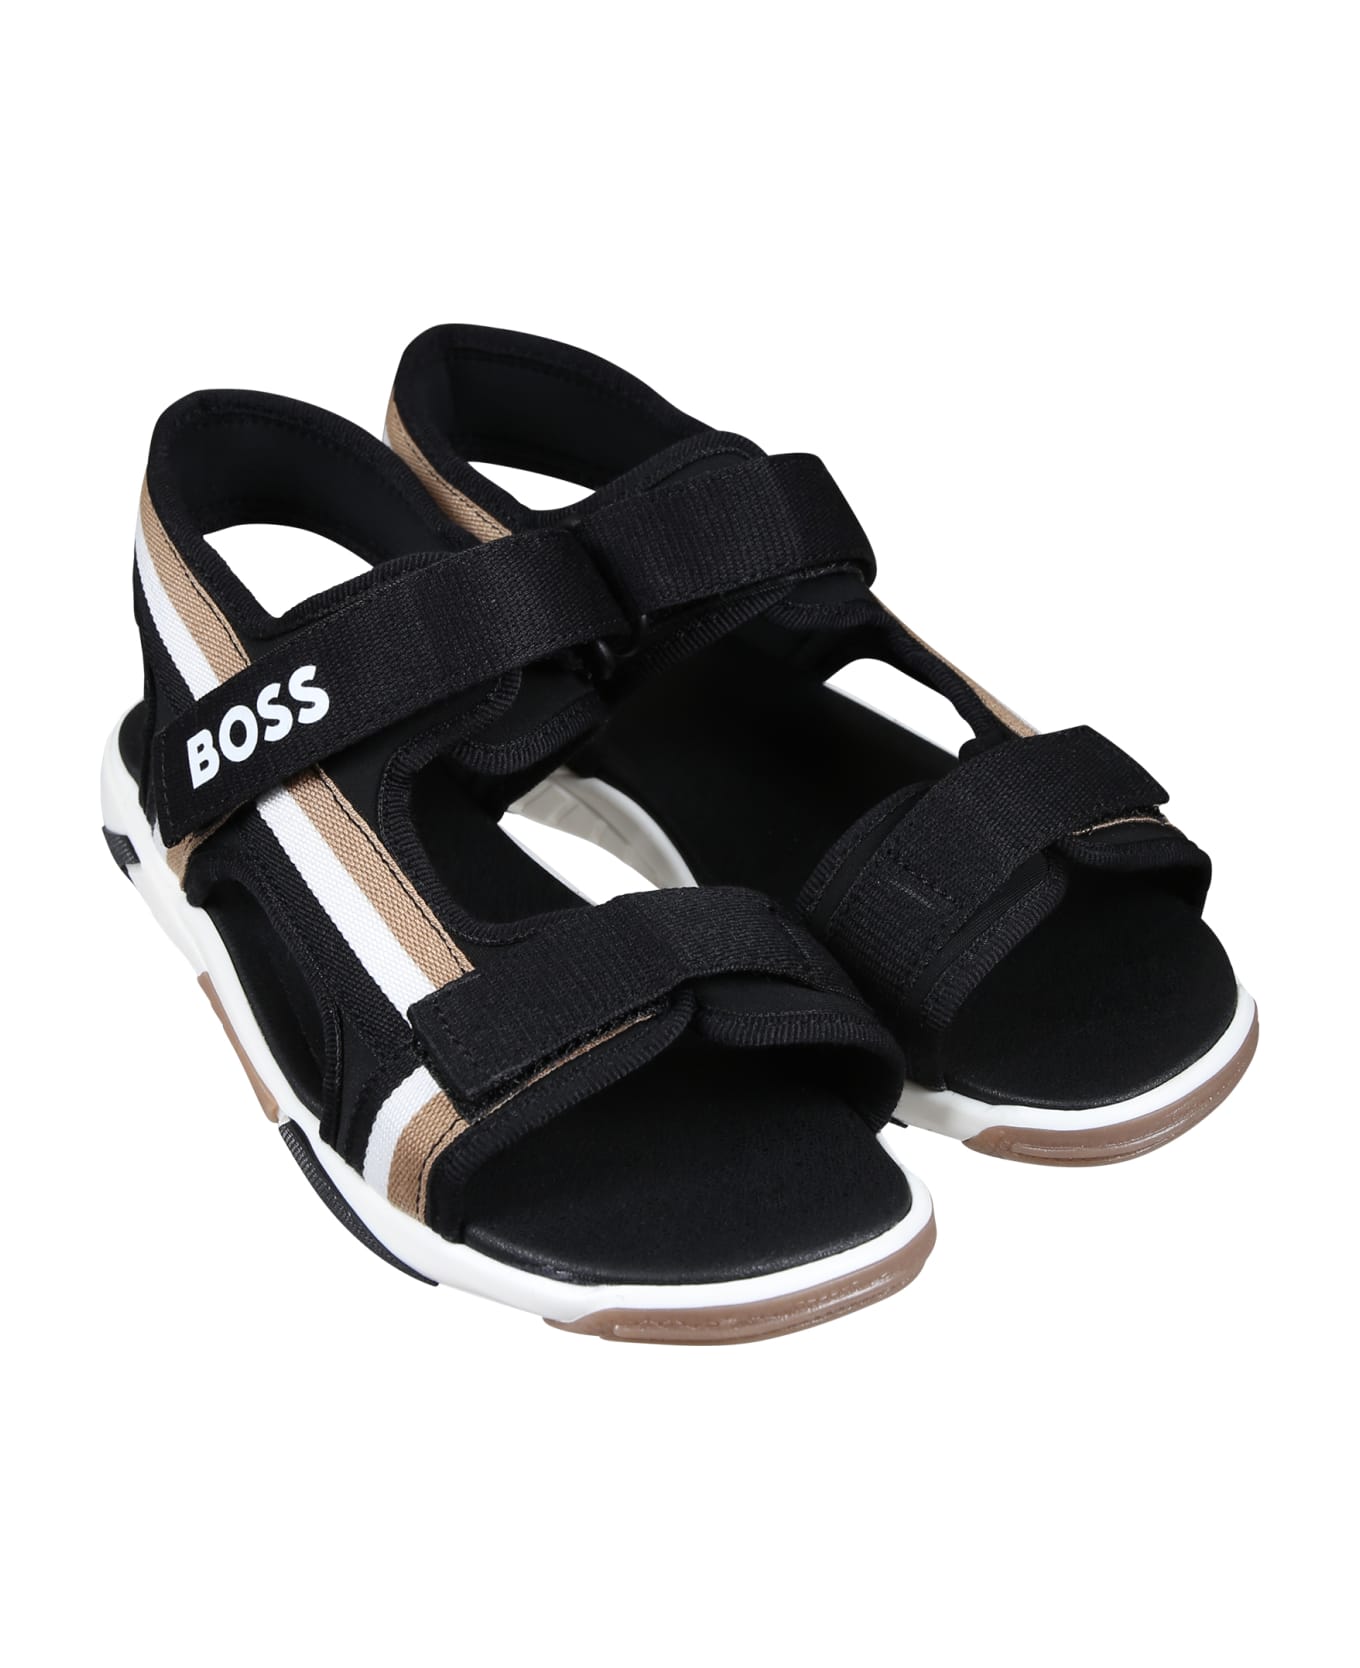 Hugo Boss Blaxk Sandals For Boy With Logo - Black シューズ